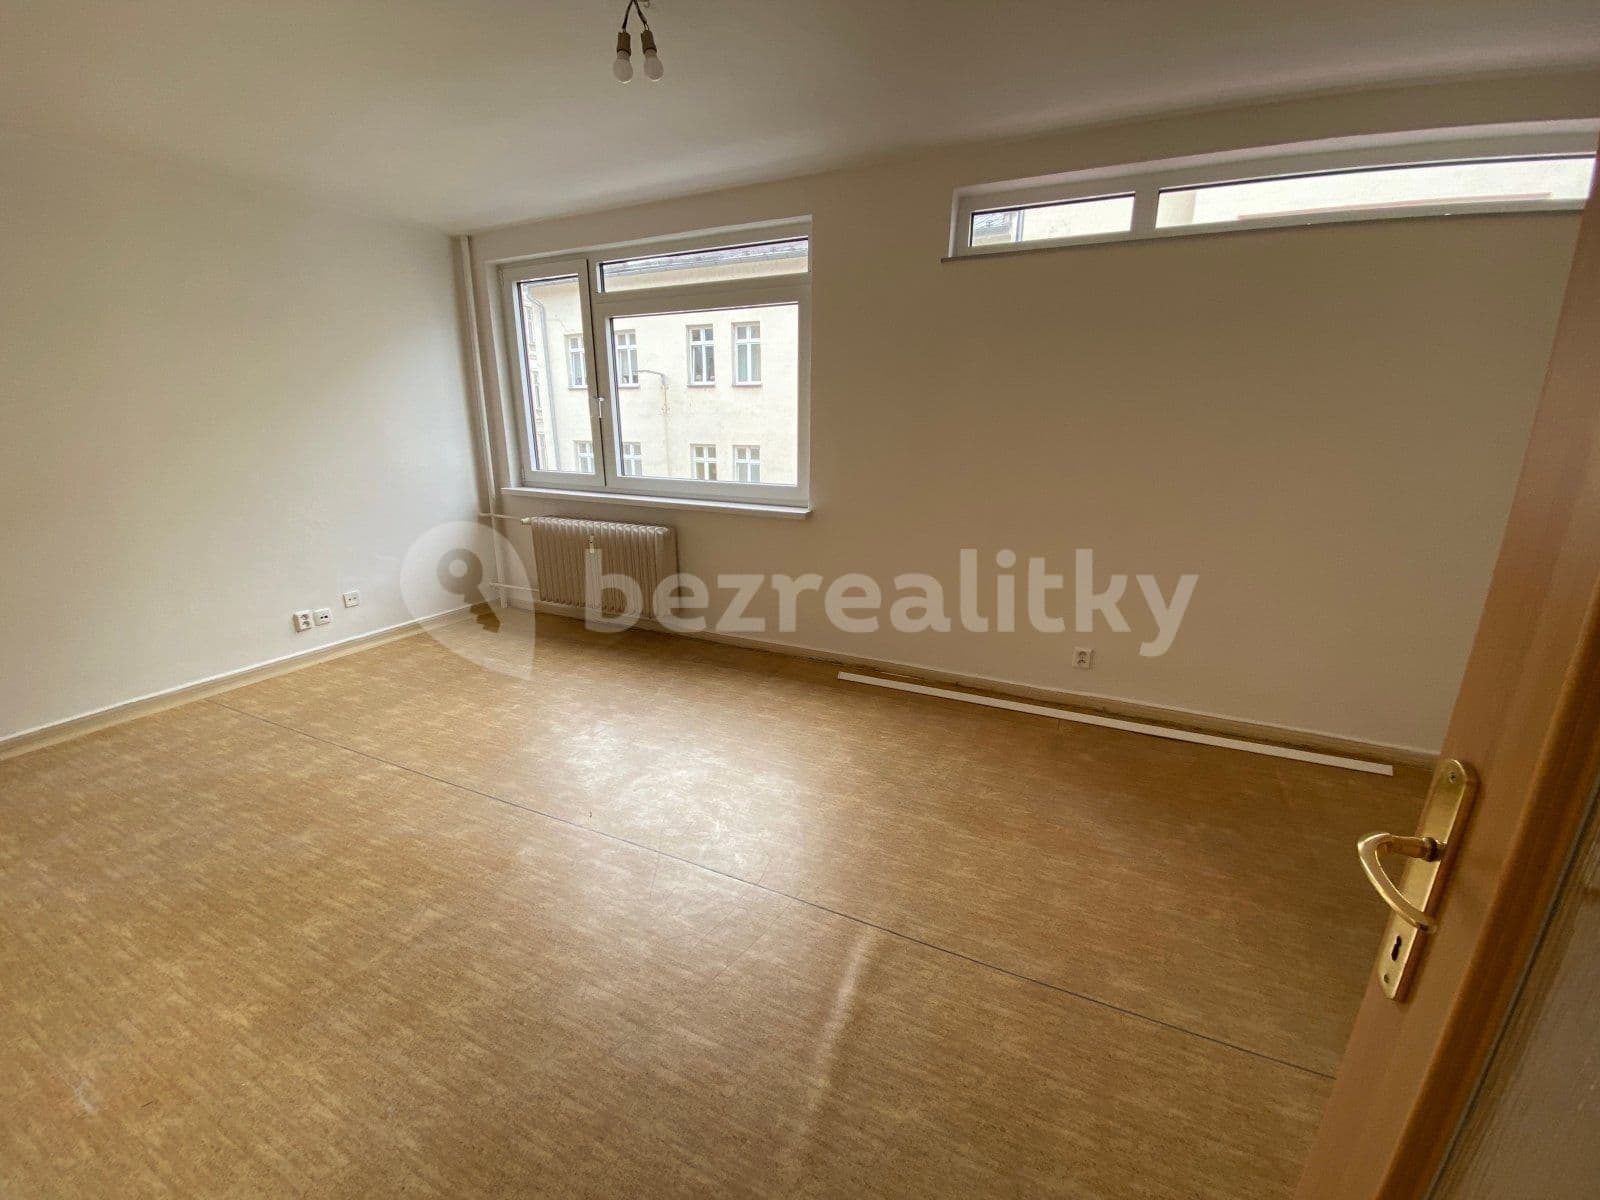 2 bedroom flat to rent, 45 m², Čs. legií, Ostrava, Moravskoslezský Region